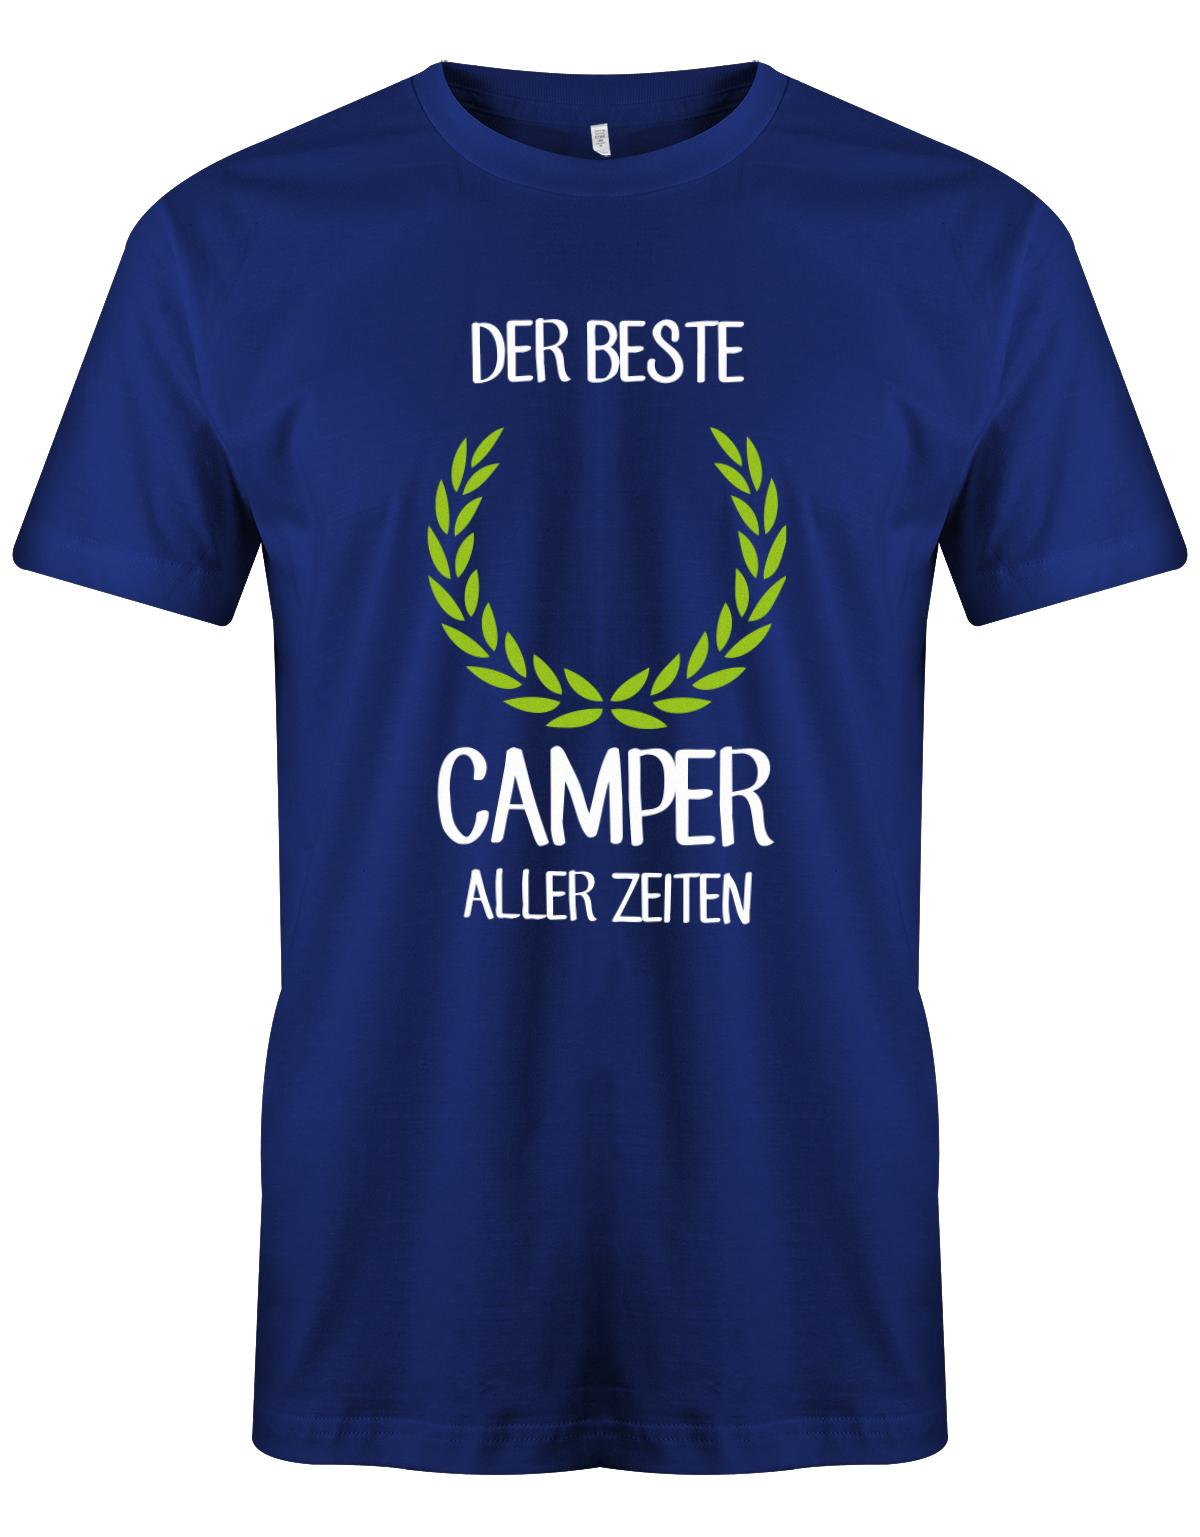 Der-beste-Camper-aller-zeiten-Herren-Camping-Shirt-royalblau